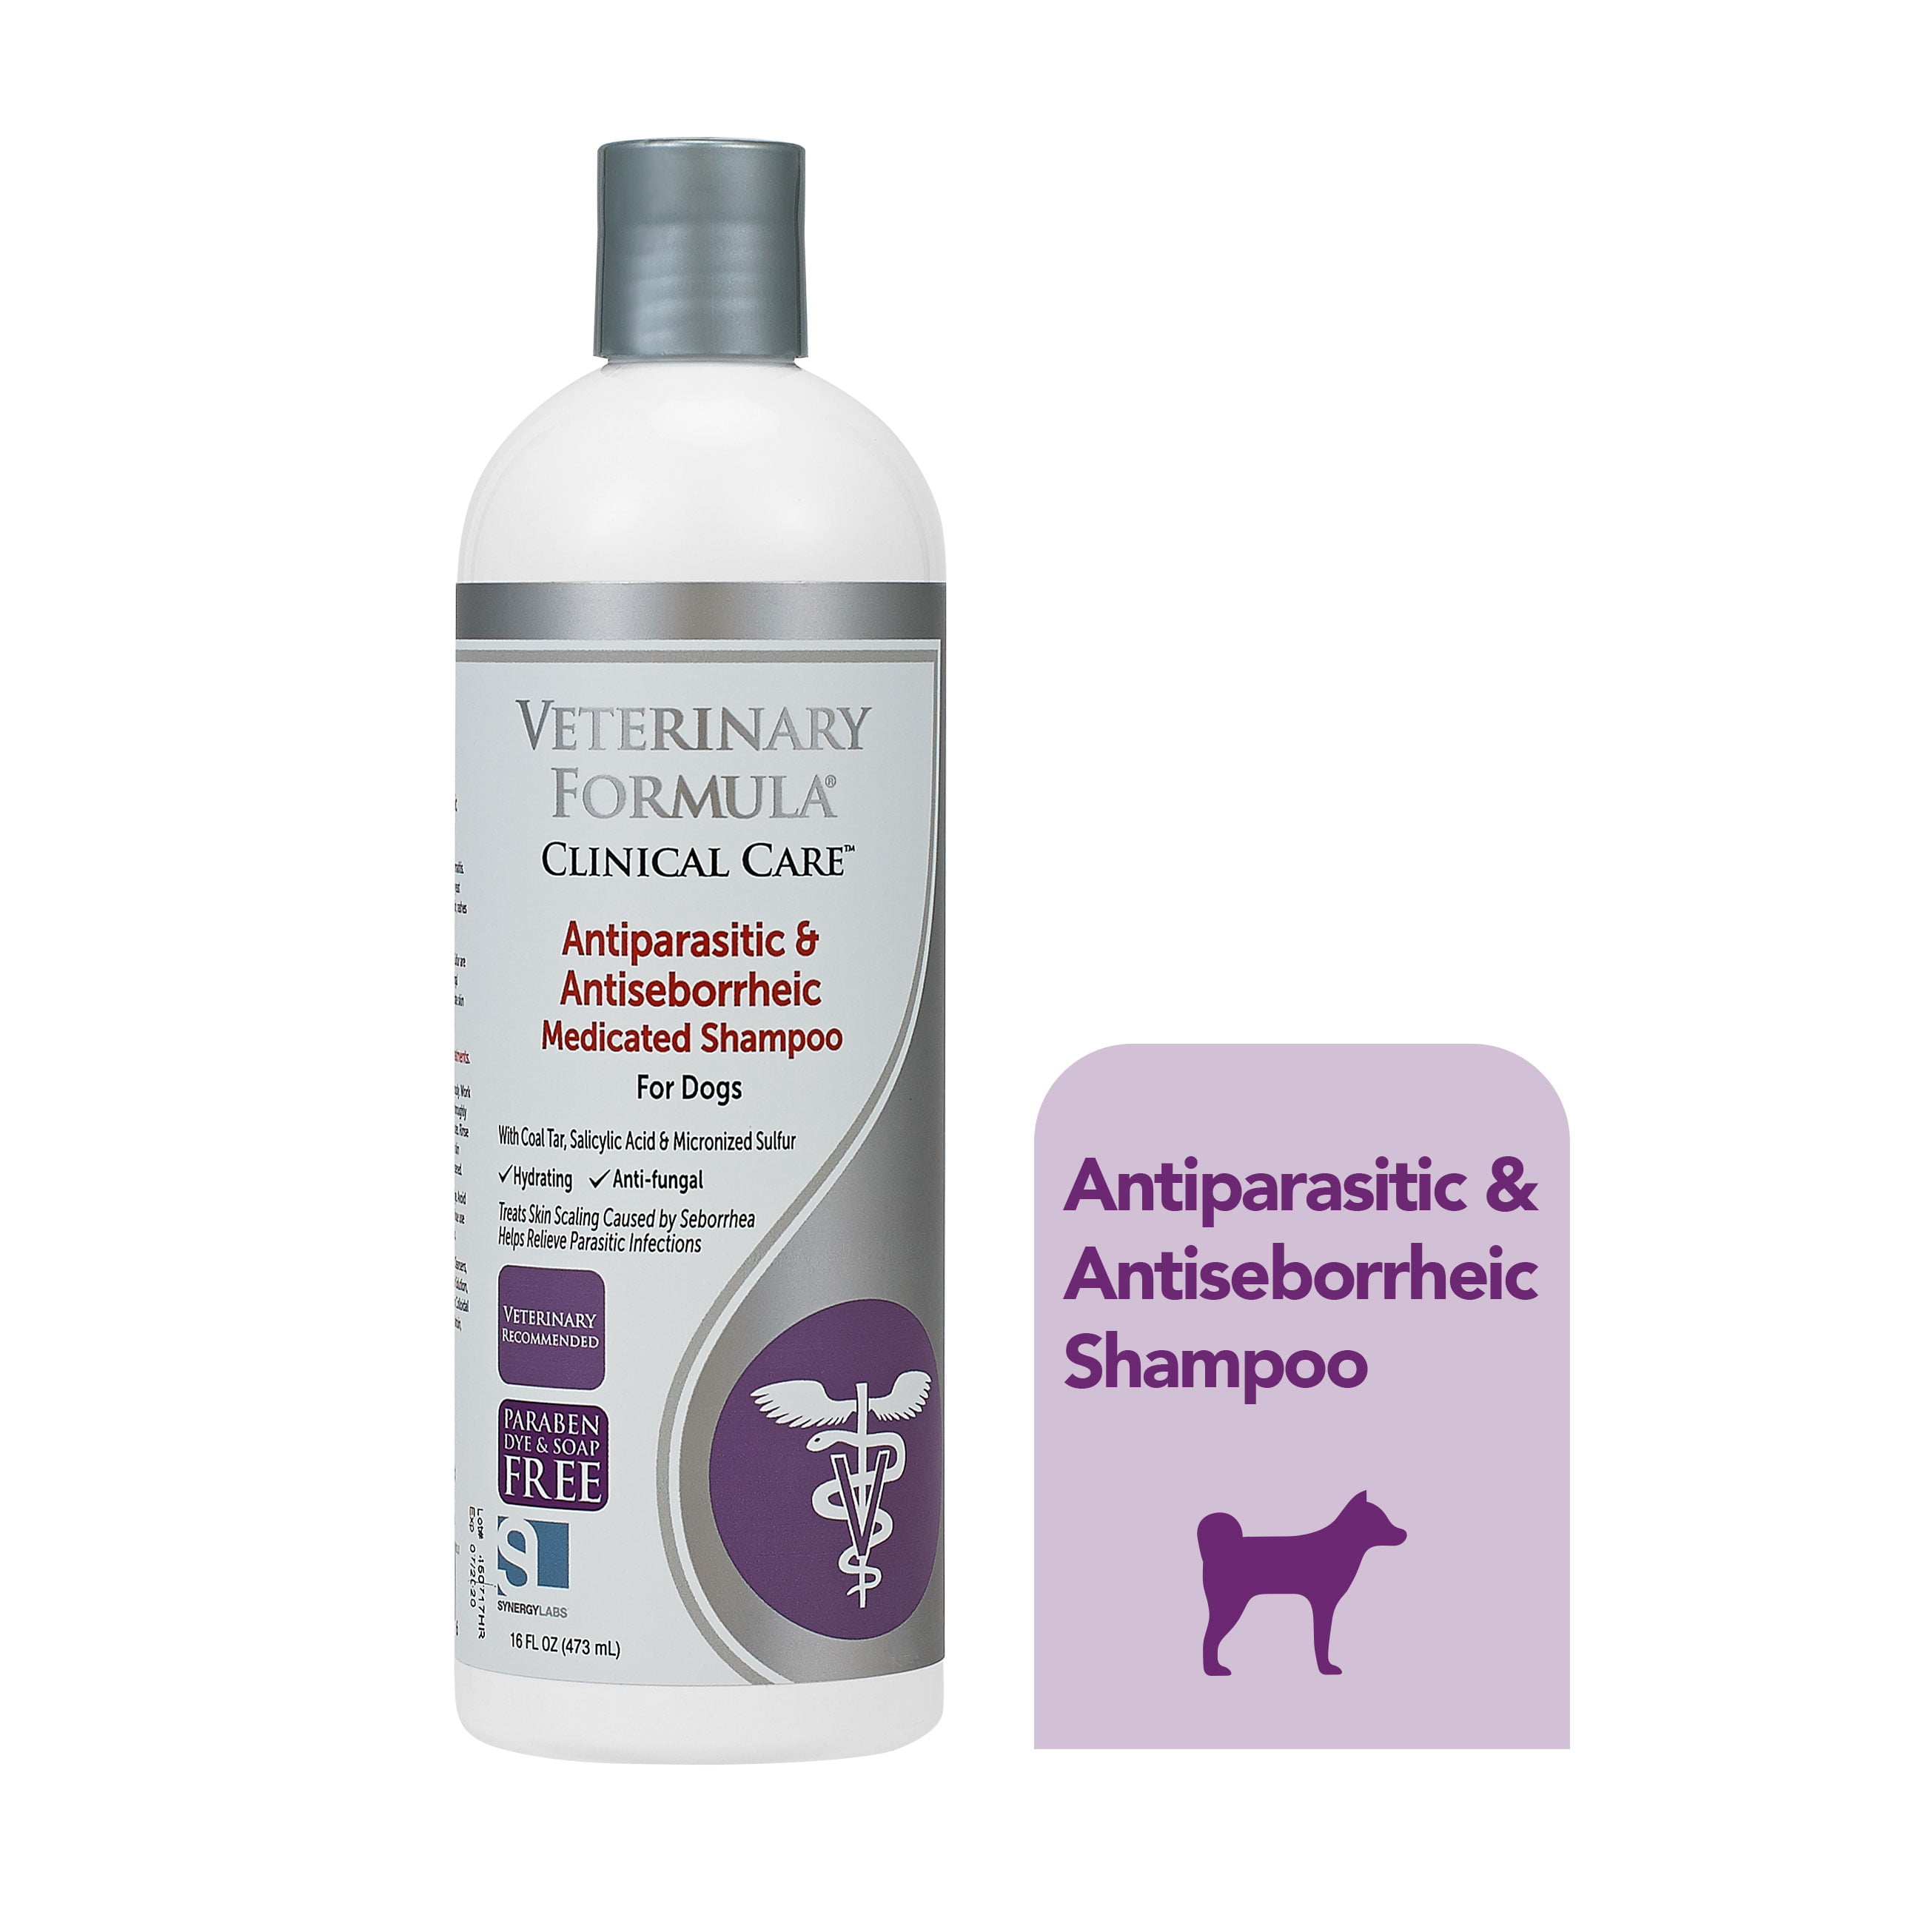 veterinary formula clinical care antiparasitic & antiseborrheic shampoo petco